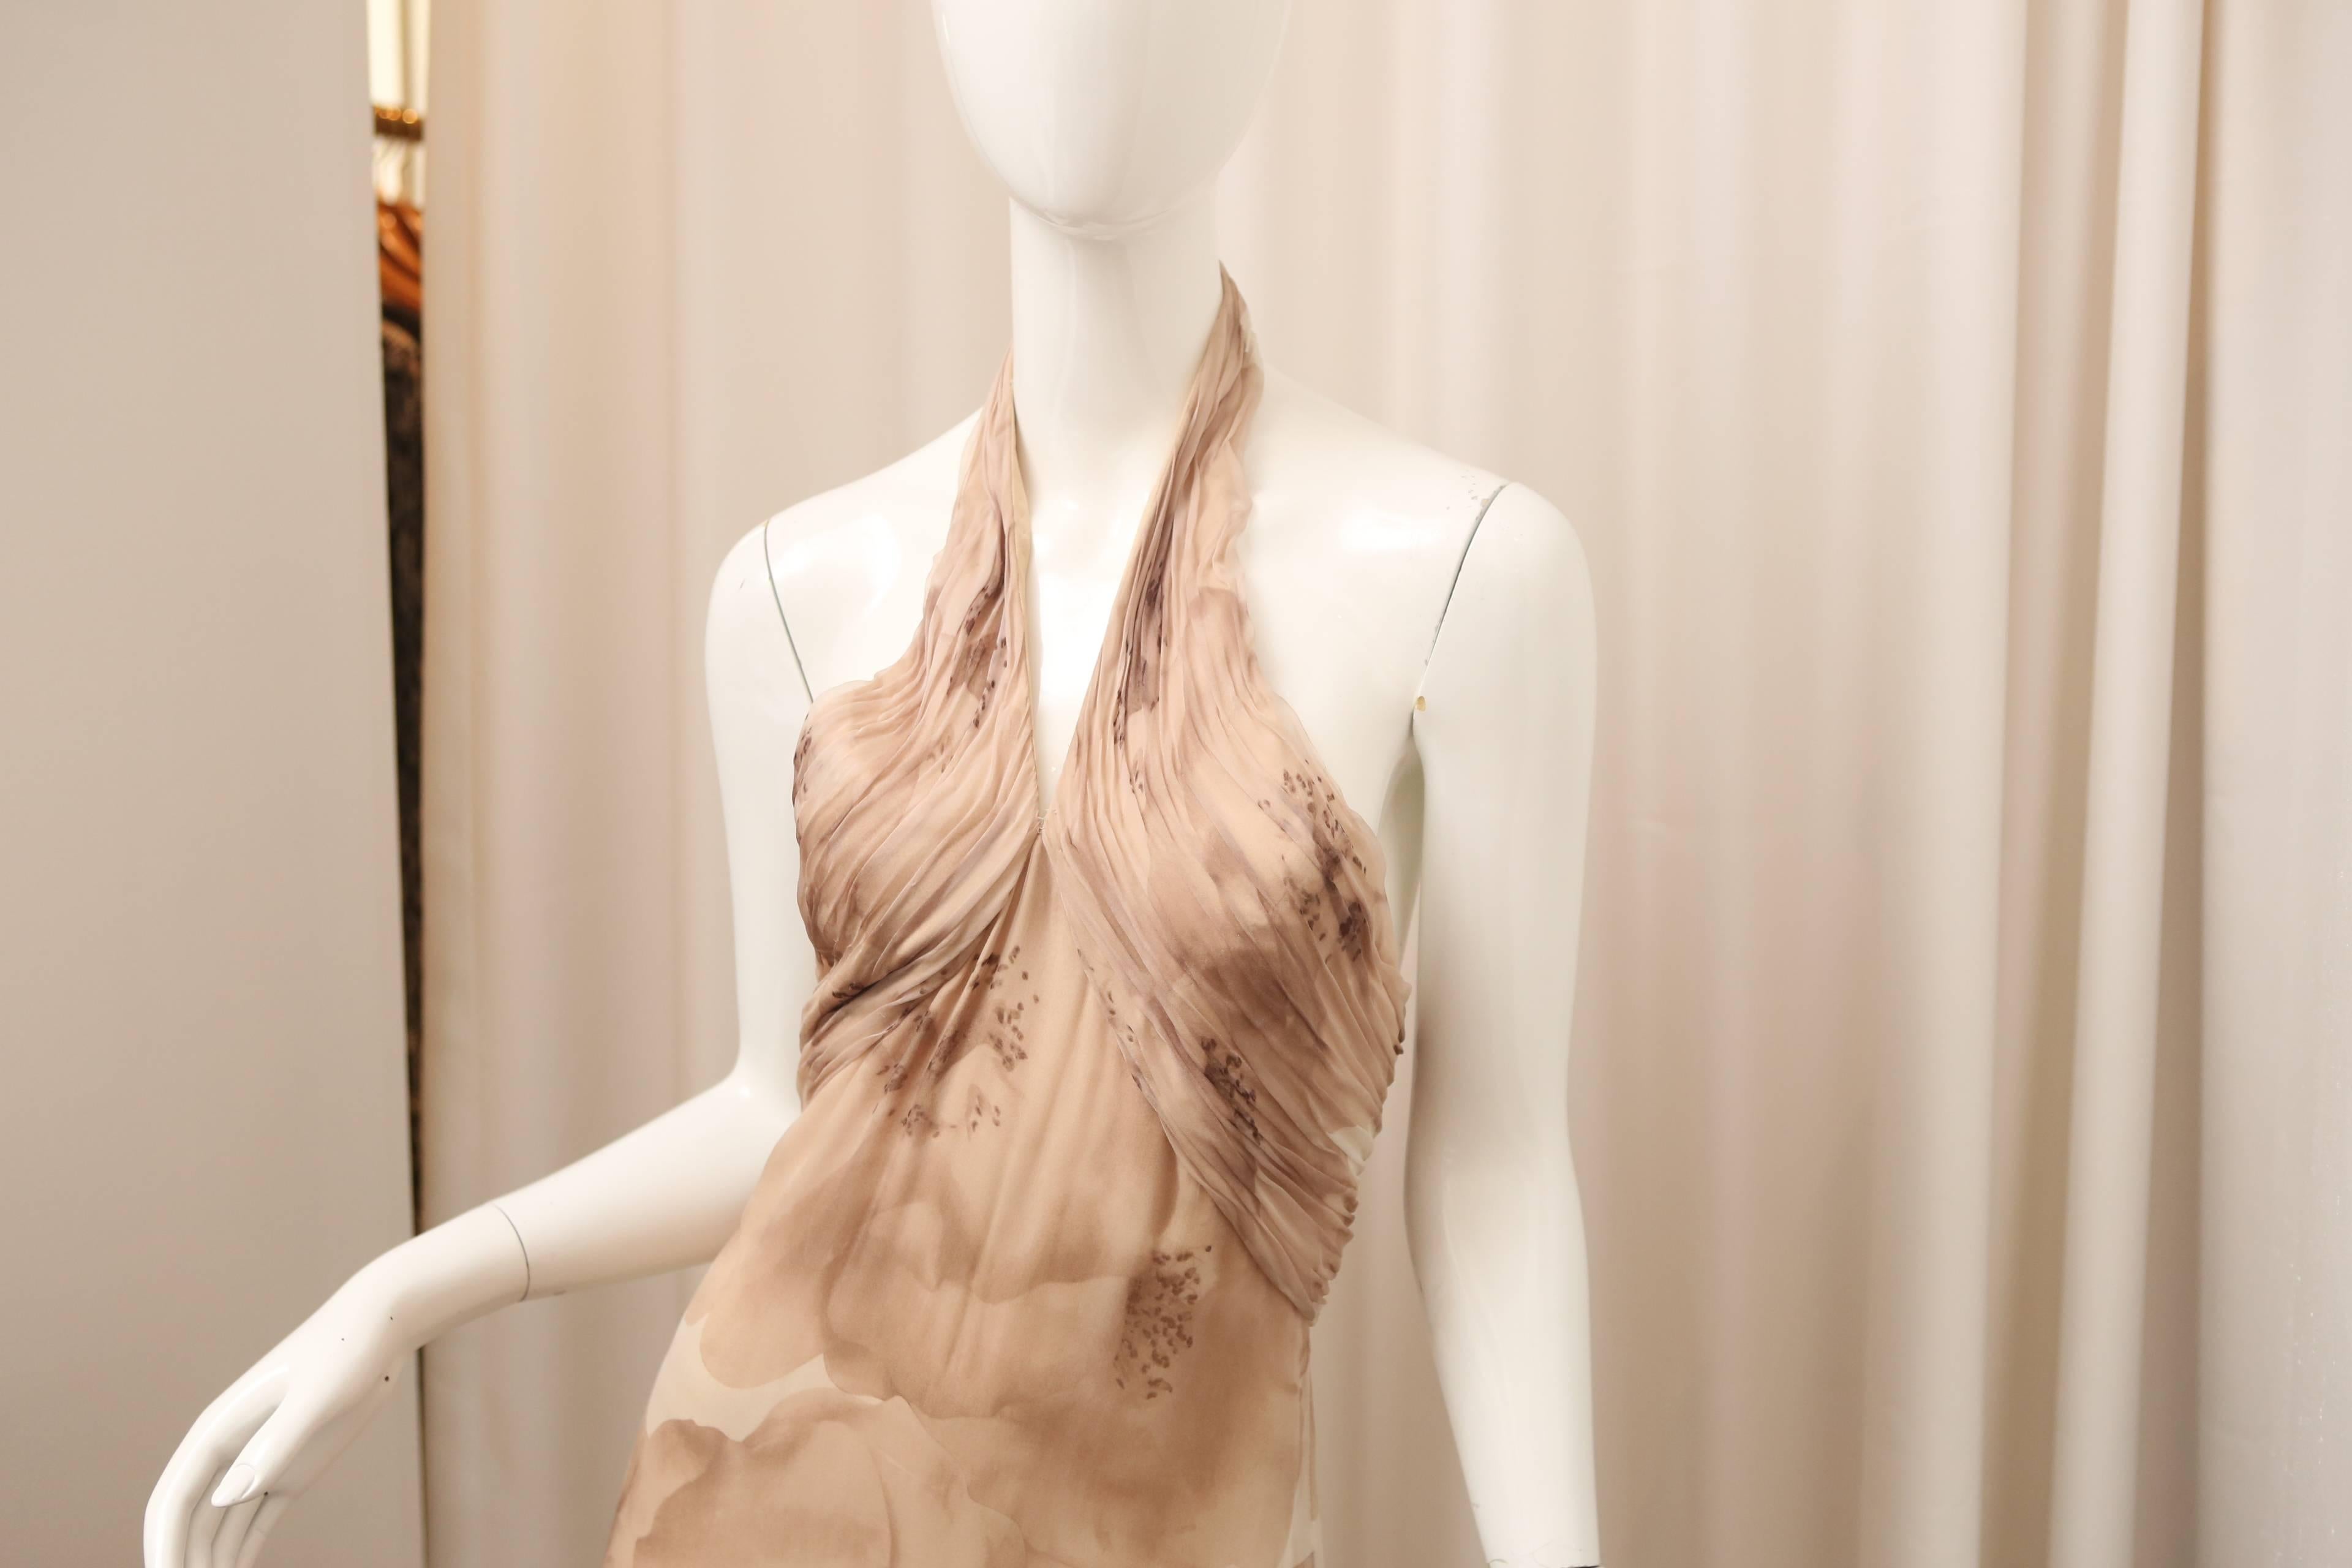 Carolina Herrera beige halter gown with floral print & ruching detail at bust.